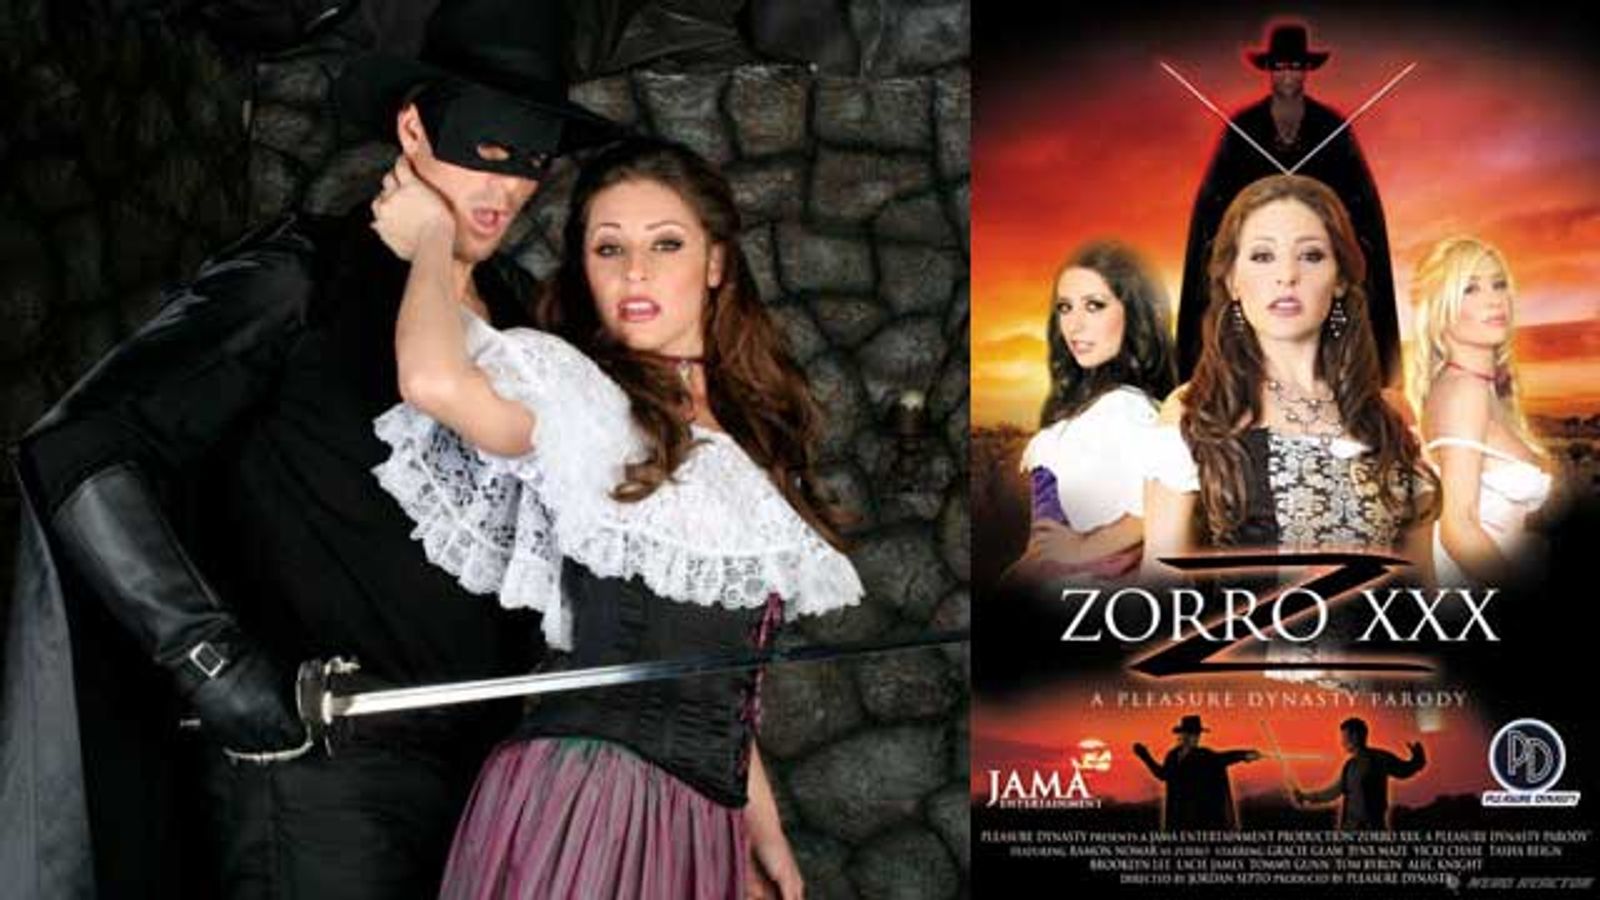 'Zorro XXX' Box Art & Photos Debut Only on NerdReactor.com